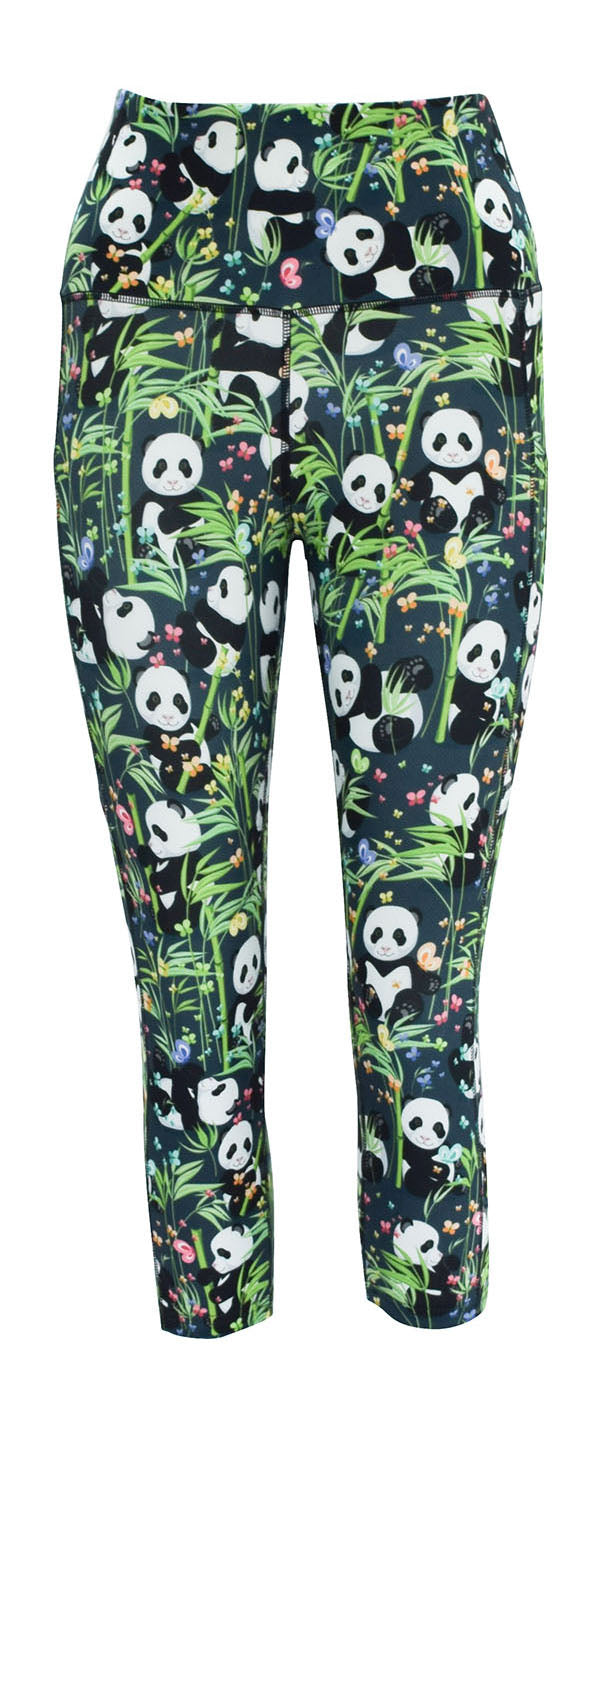 Panda On The Loose + Pockets-Adult Pocket Leggings